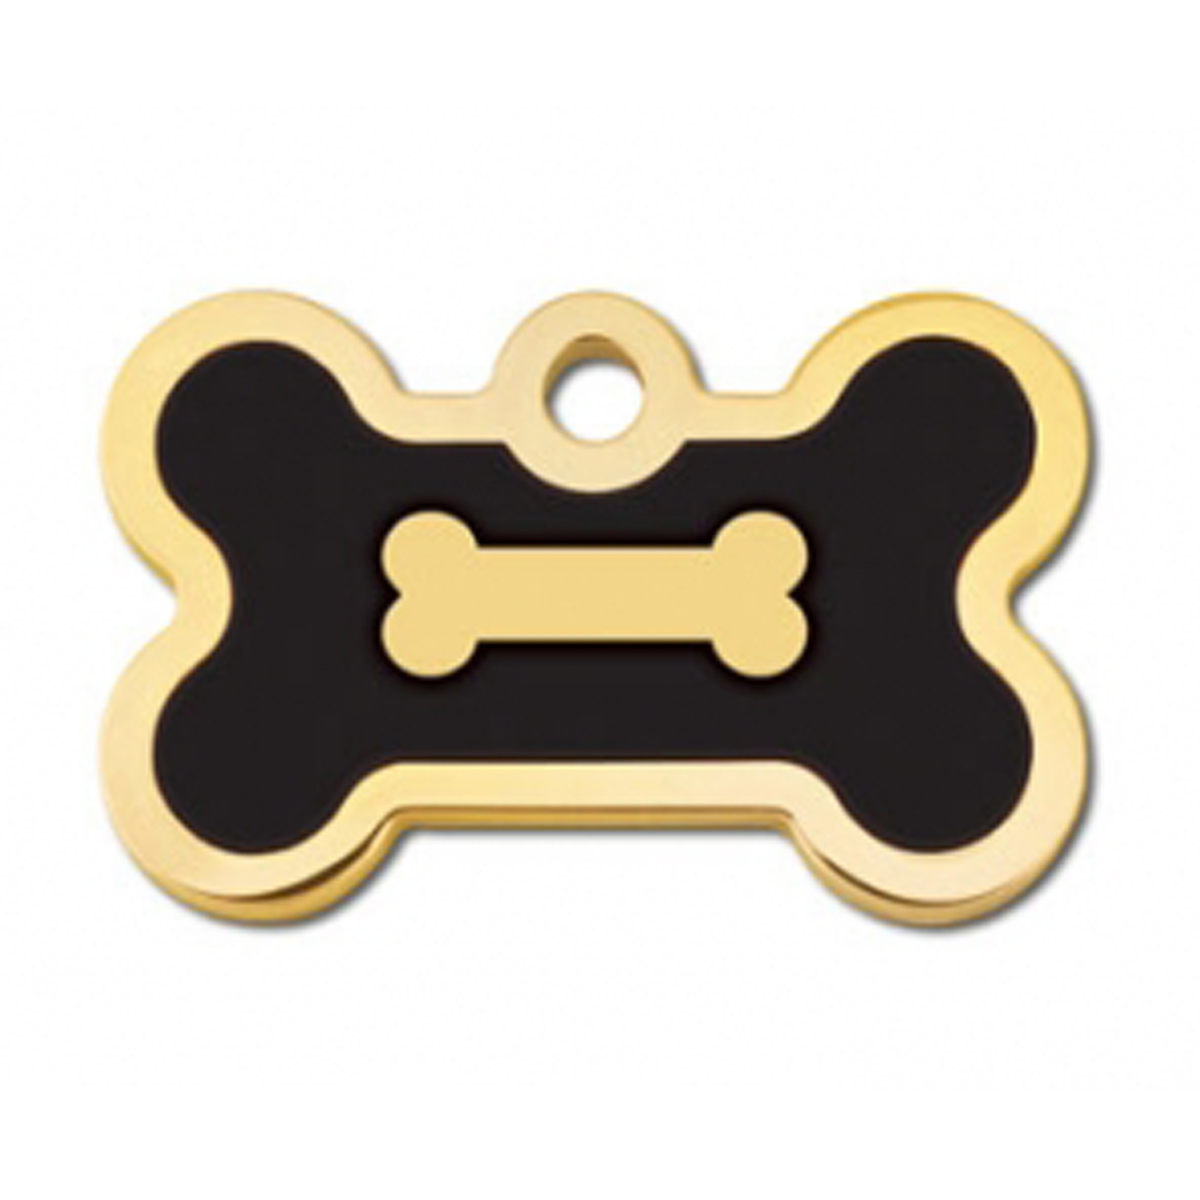 Bone Small Engravable Pet I.D. Tag - Gold and Black